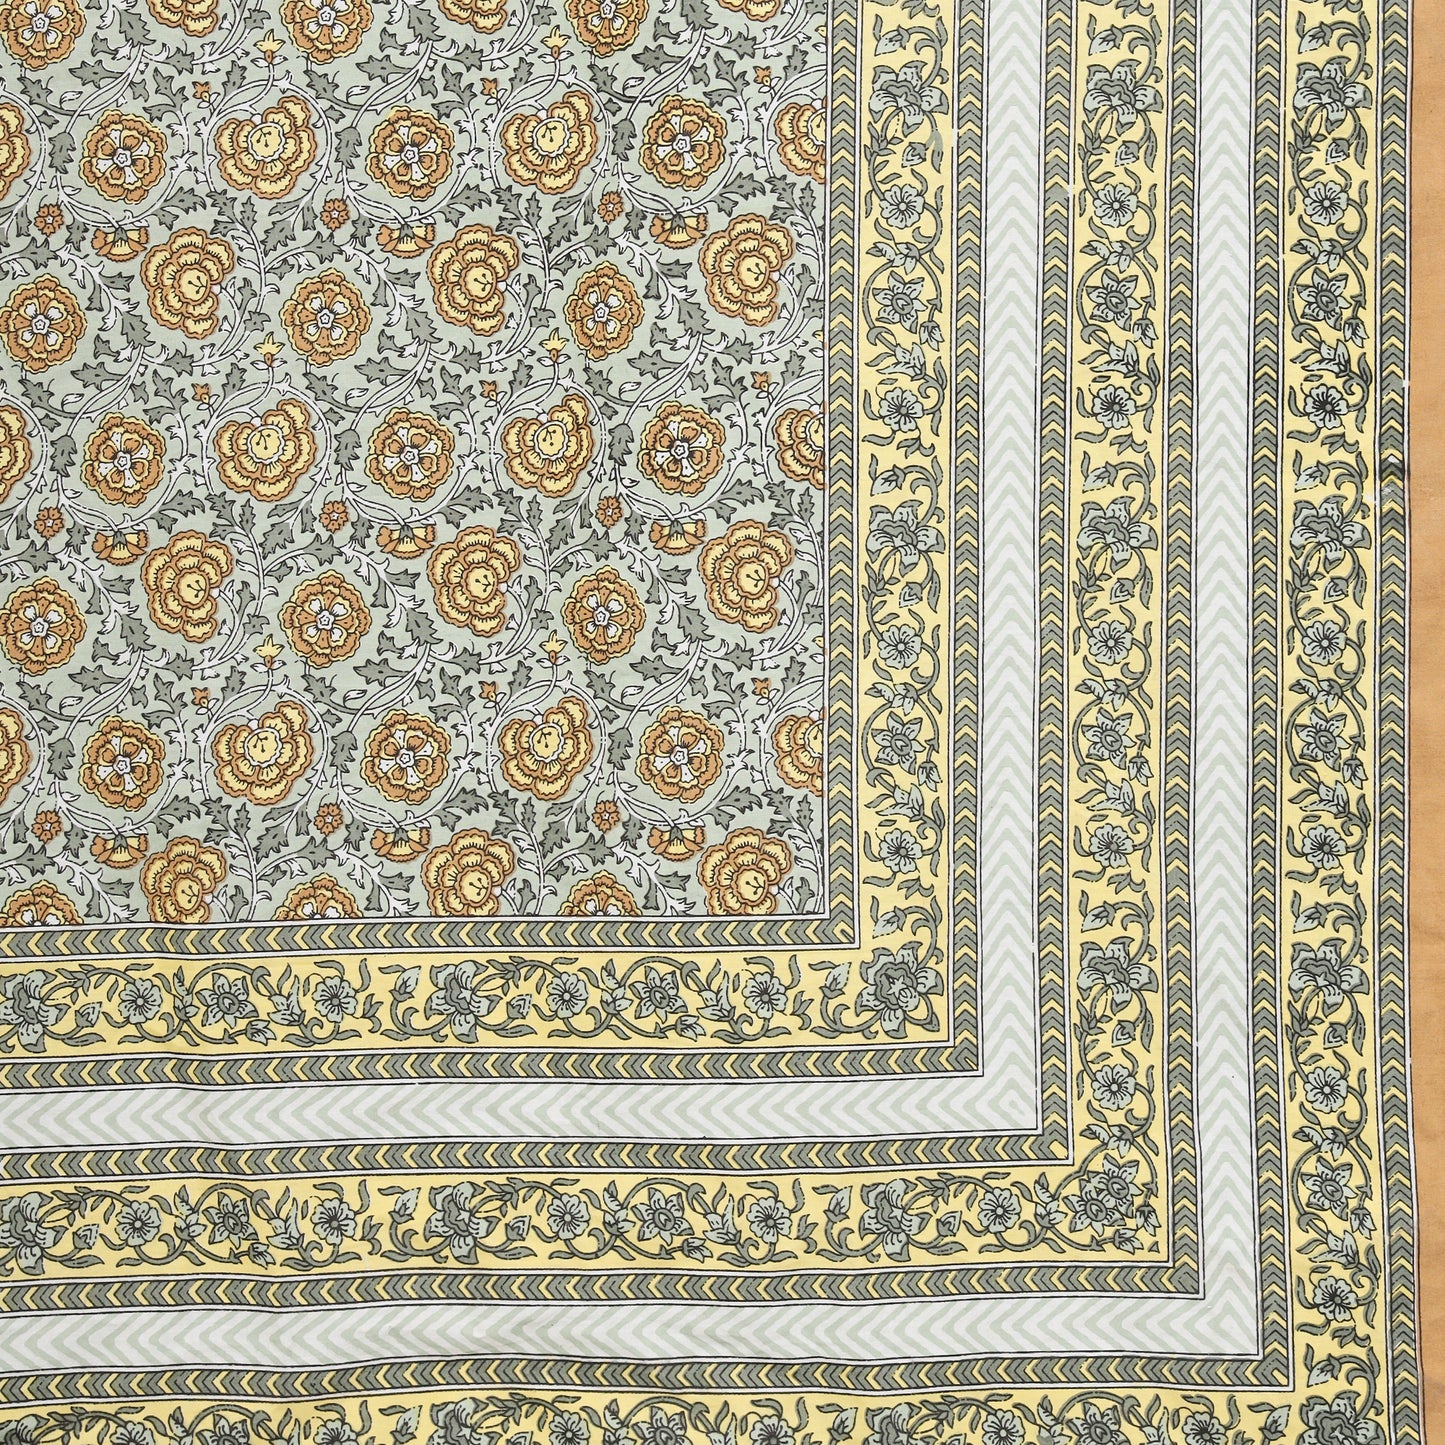 Pure Cotton Block Print Jaipuri Bedsheet - Super King Size 120*120 inches - Yellow Brown Flowers